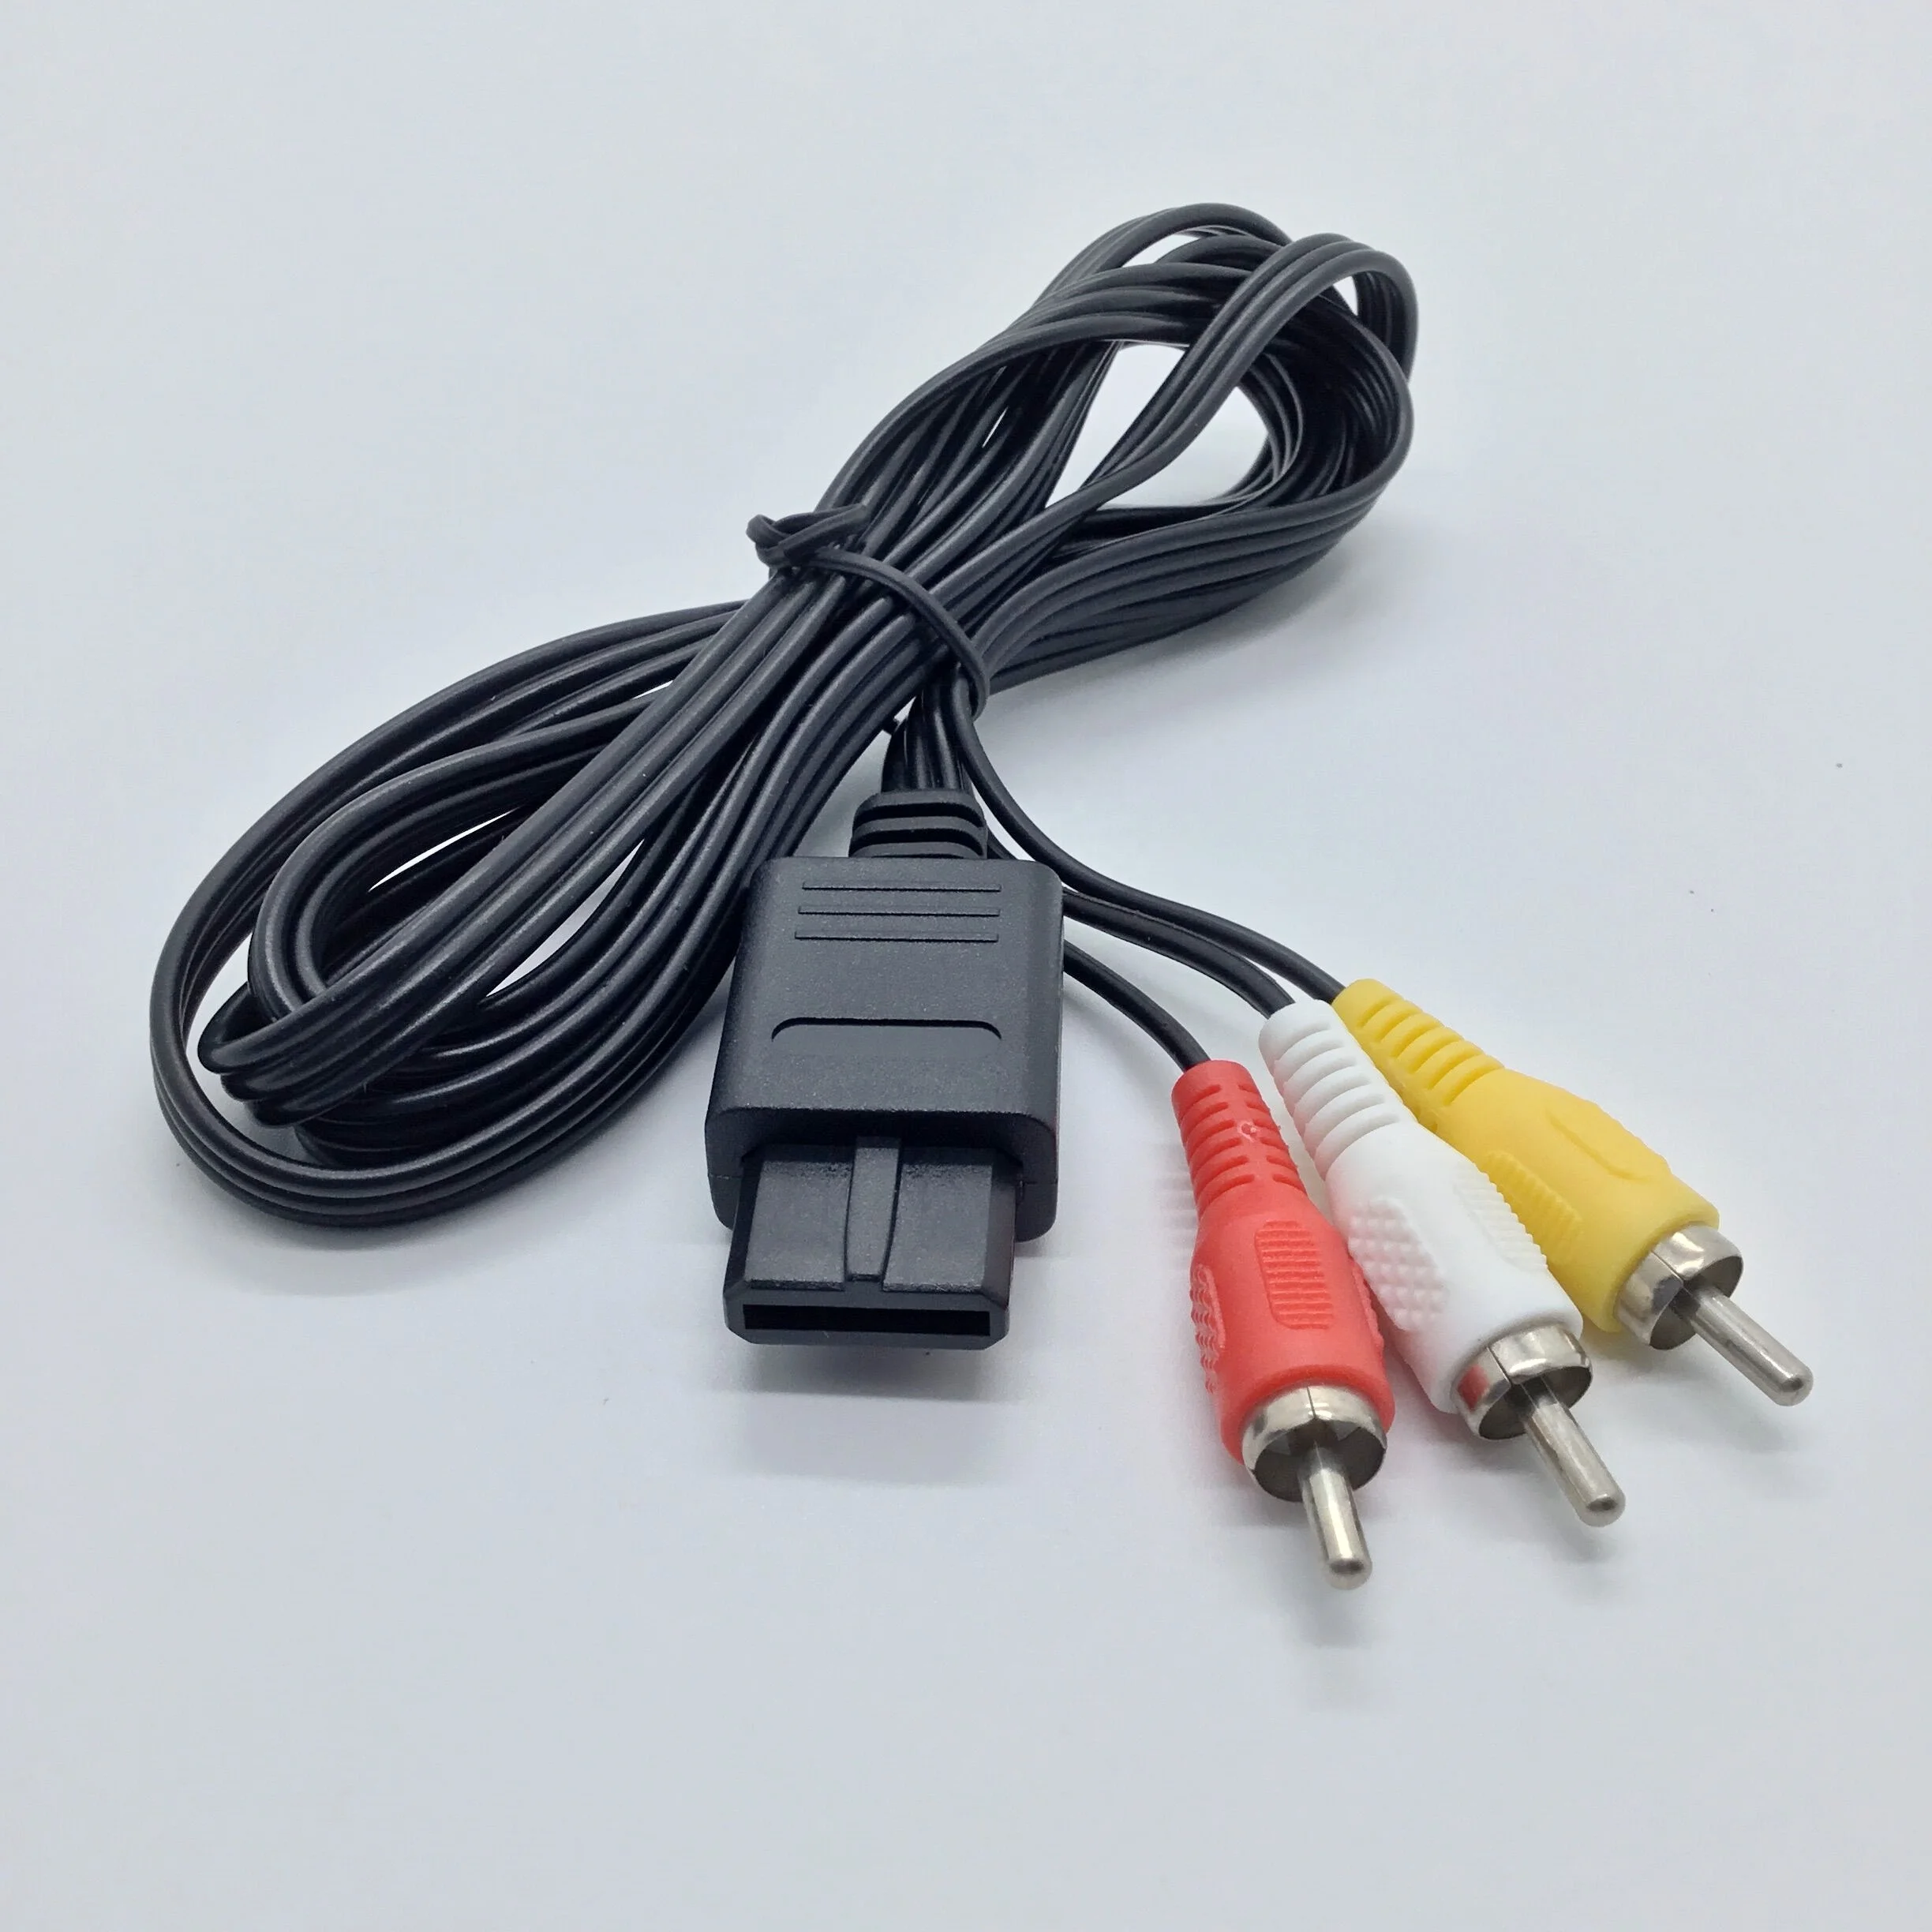 Voor Snes Kabel Voor 64 N64 Gamecube Rca Kabel Av Composiet Kabel Adapter Audio Video Cord - Buy Snes Av Kabel,Av-kabel Voor Nintendo,Voor Gamecube Rca Kabel Product on